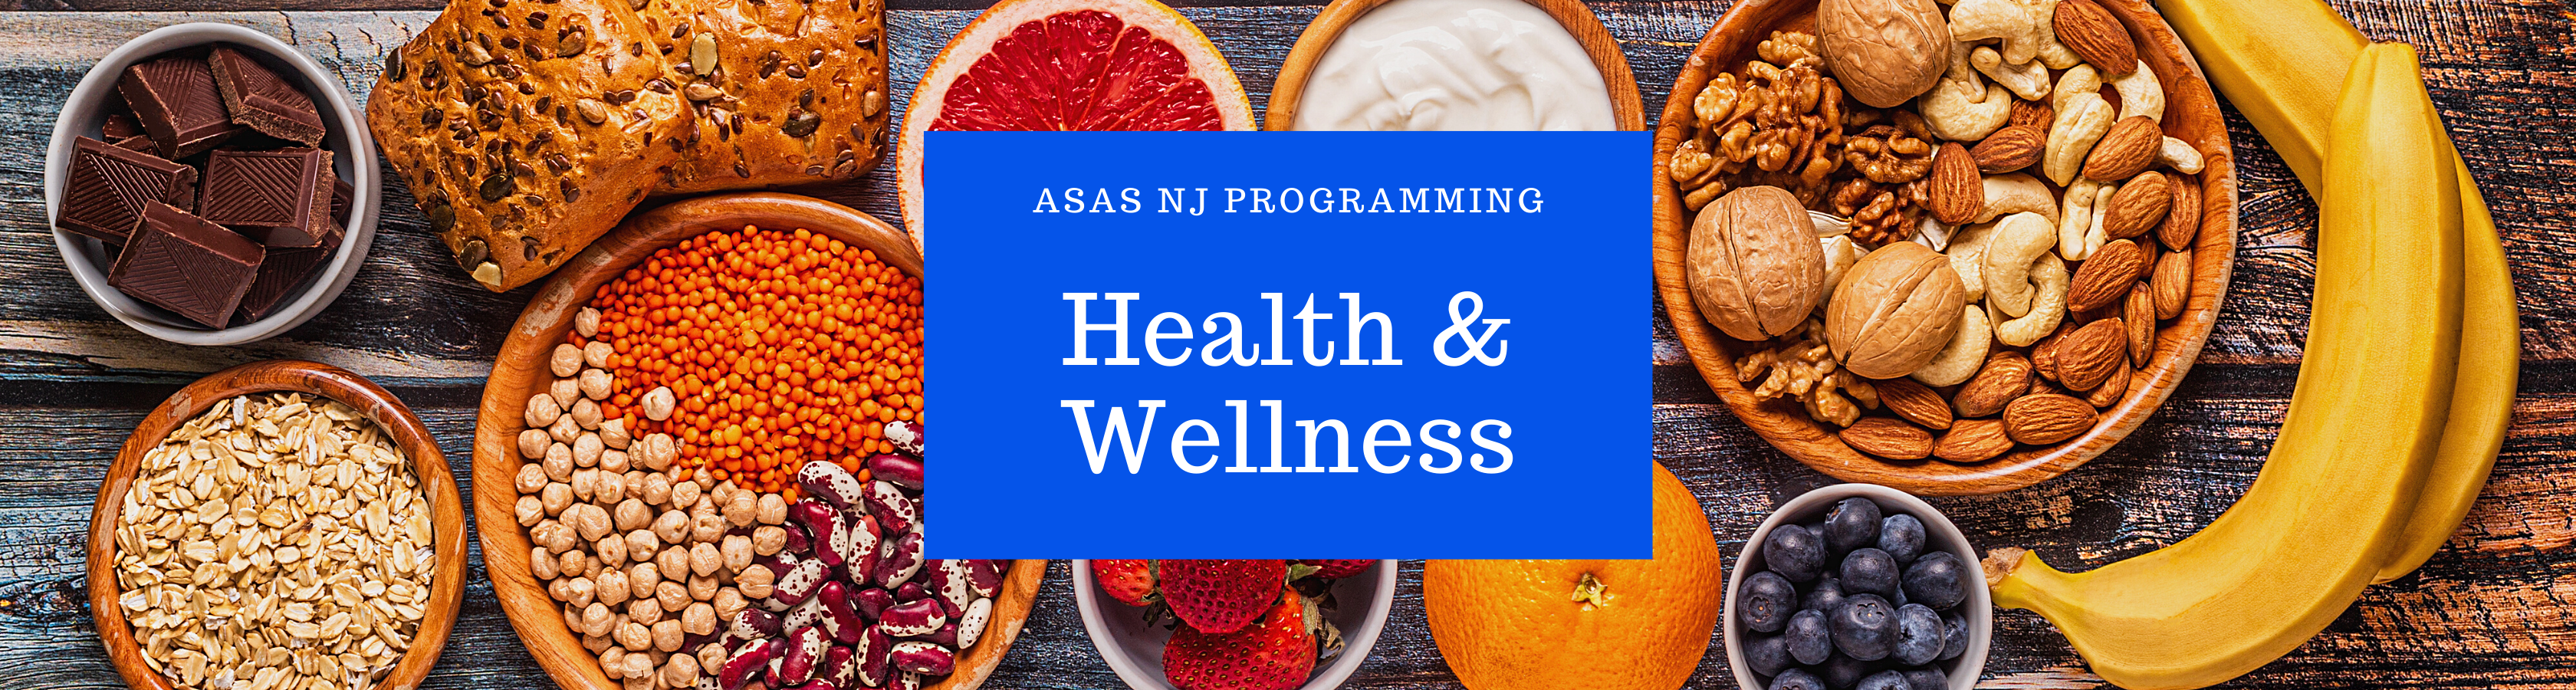 Health & Wellness 2